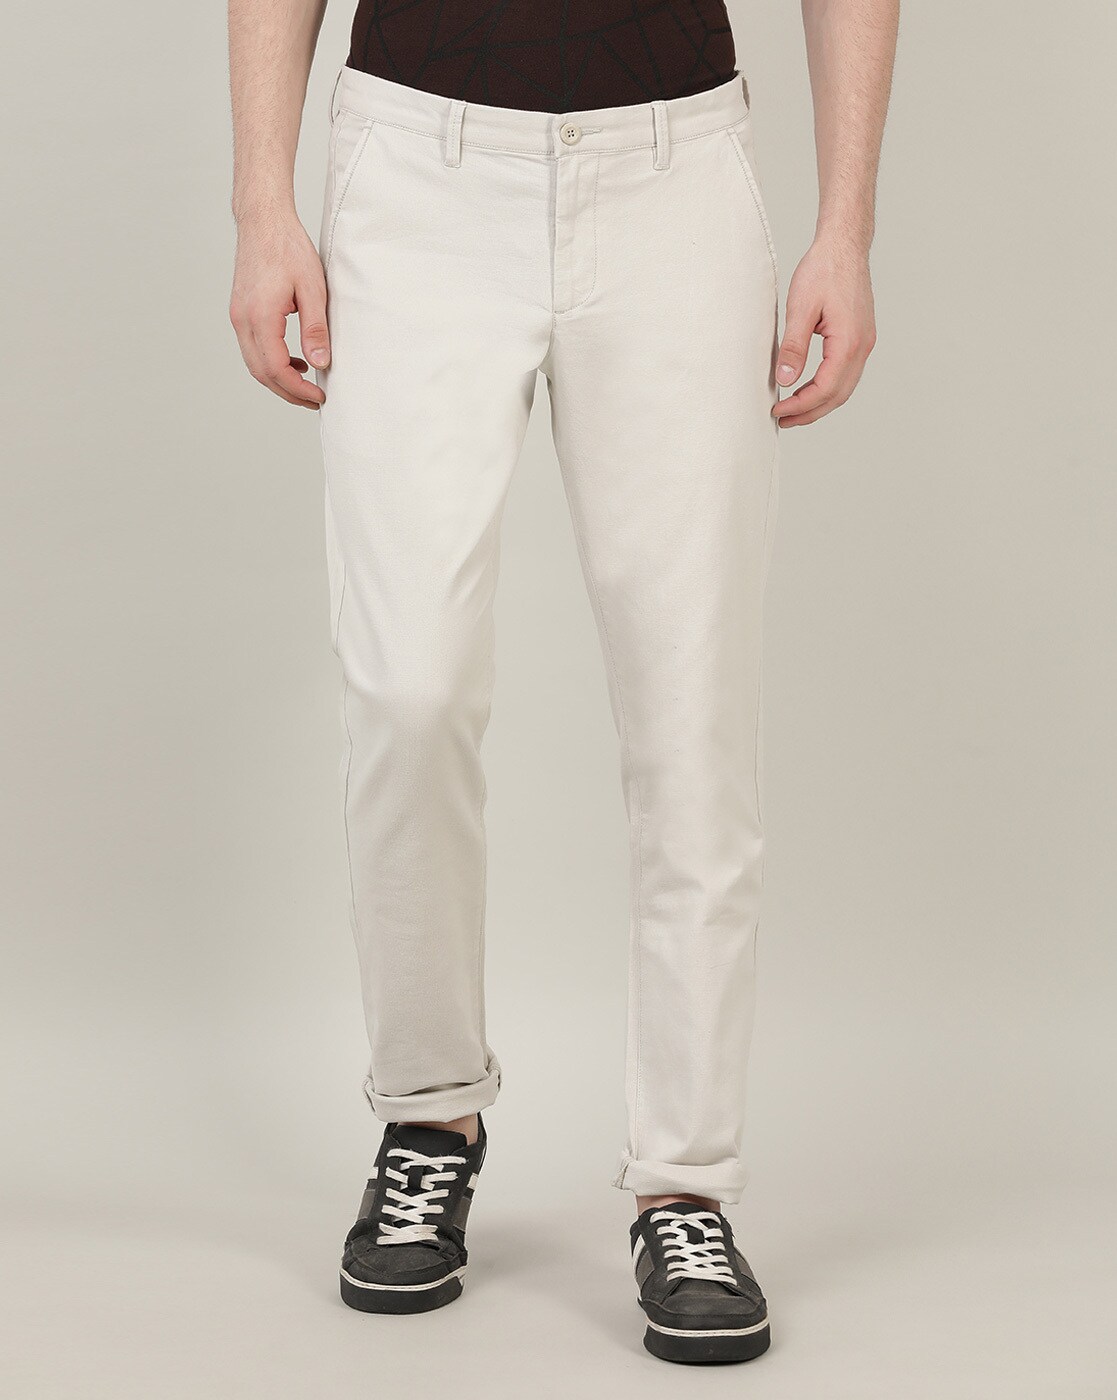 Buy Brown Trousers & Pants for Men by AJIO Online | Ajio.com